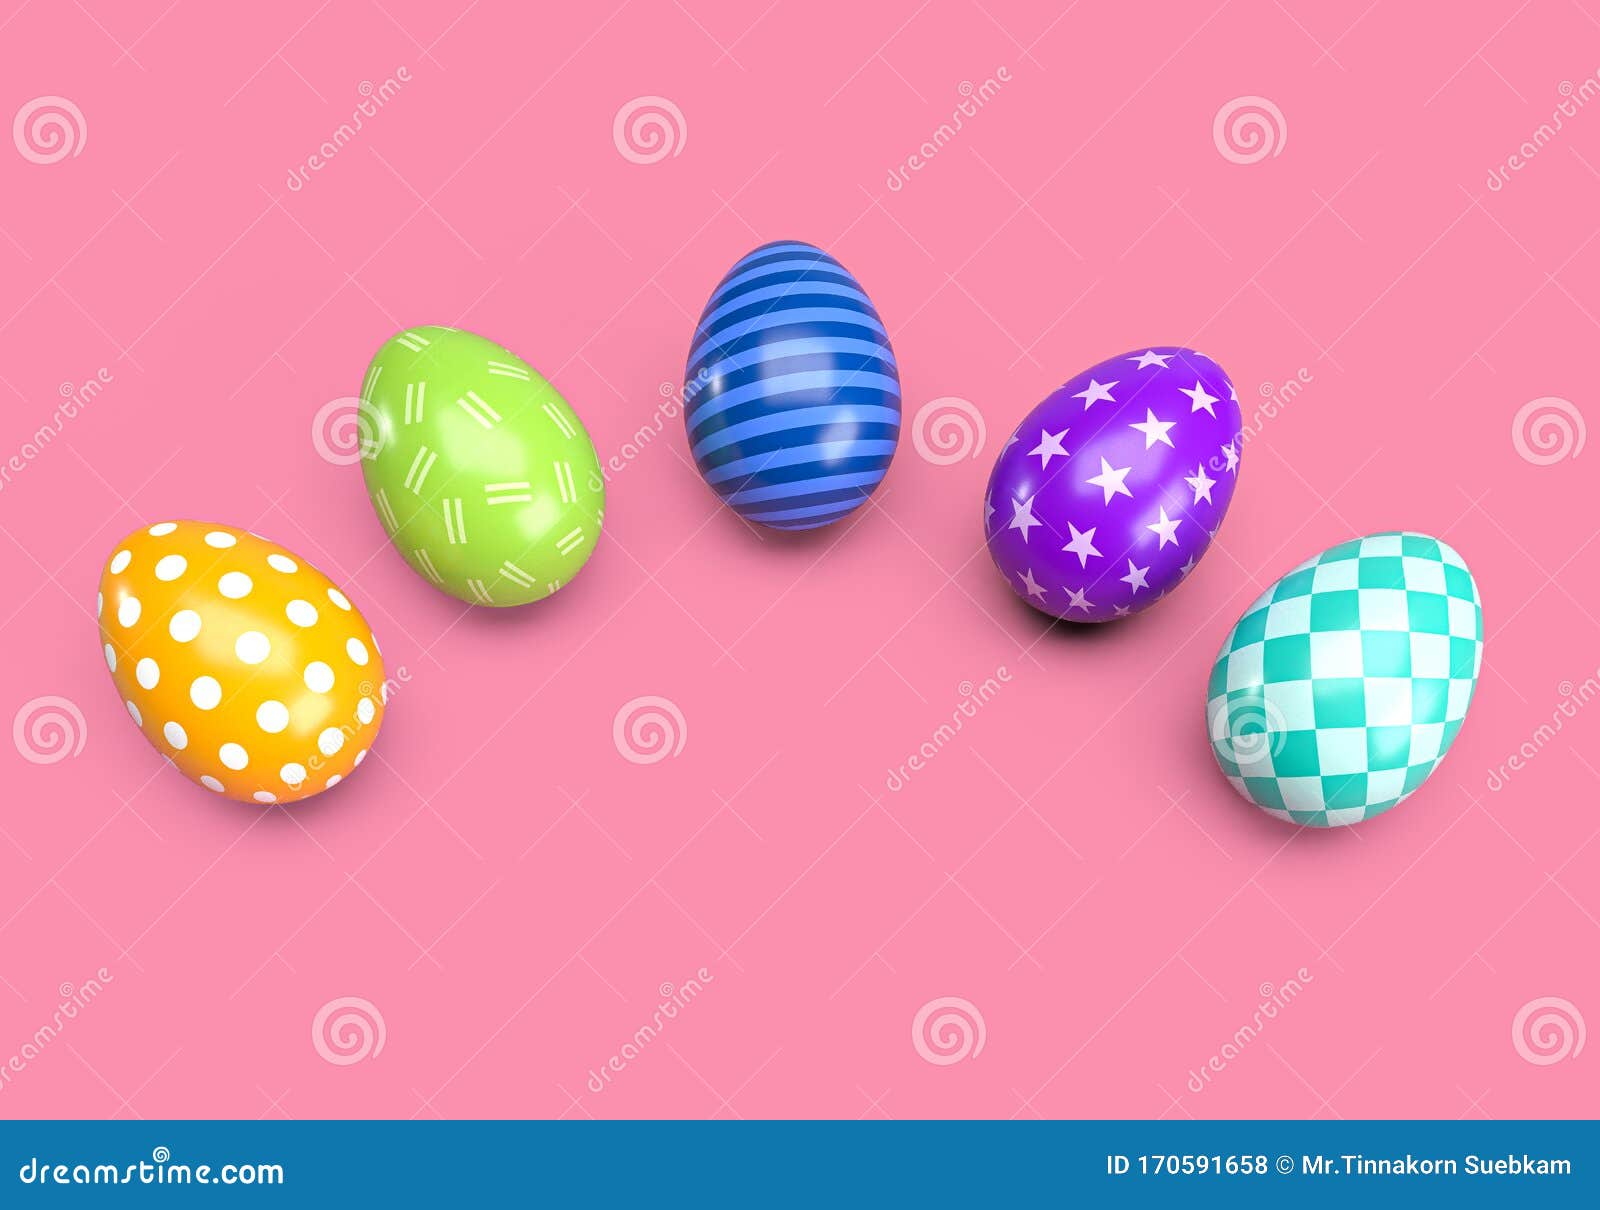 Representación 3d De Dibujos Animados De Chocolate Decorados Con Colores  Huevos De Pascua Para Su Uso En Diseños De Pascua, Sobre Stock de  ilustración - Ilustración de iglesia, comedor: 170591658